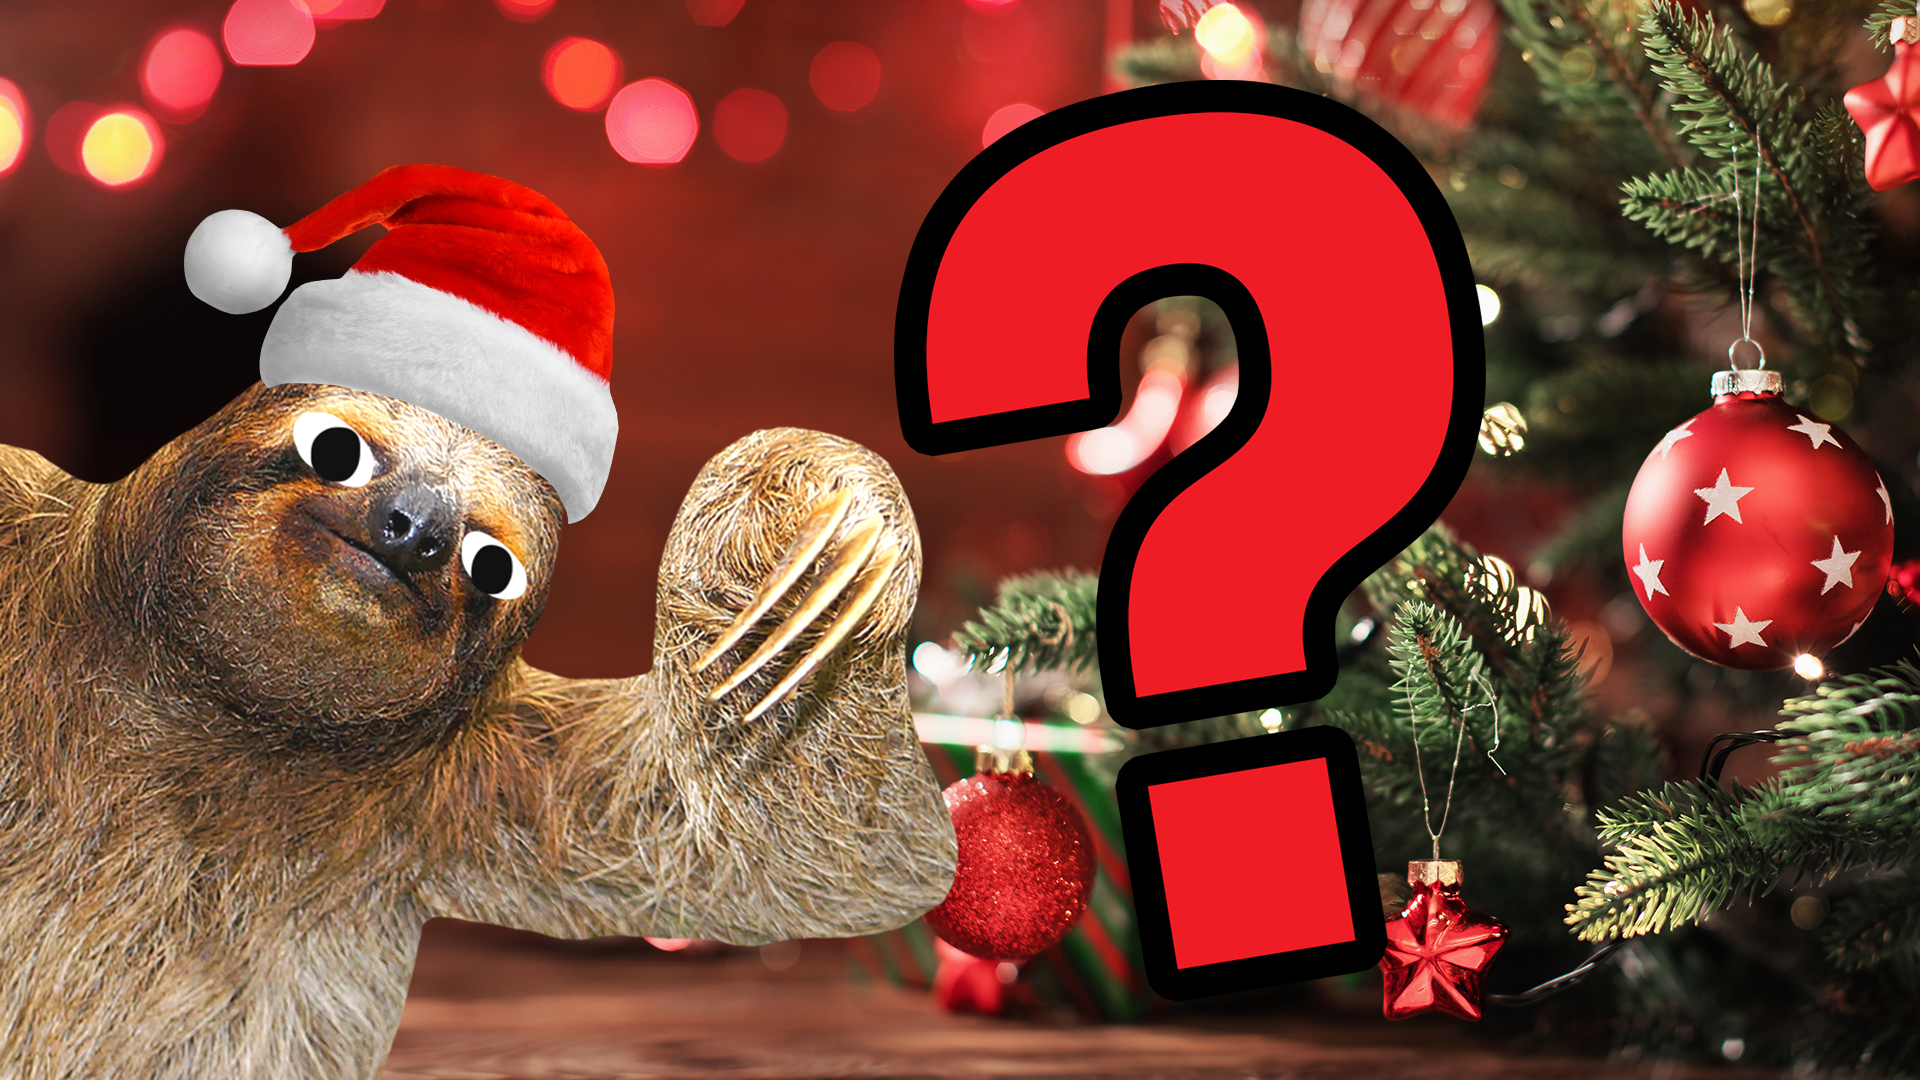 A sloth by a Christmas tree